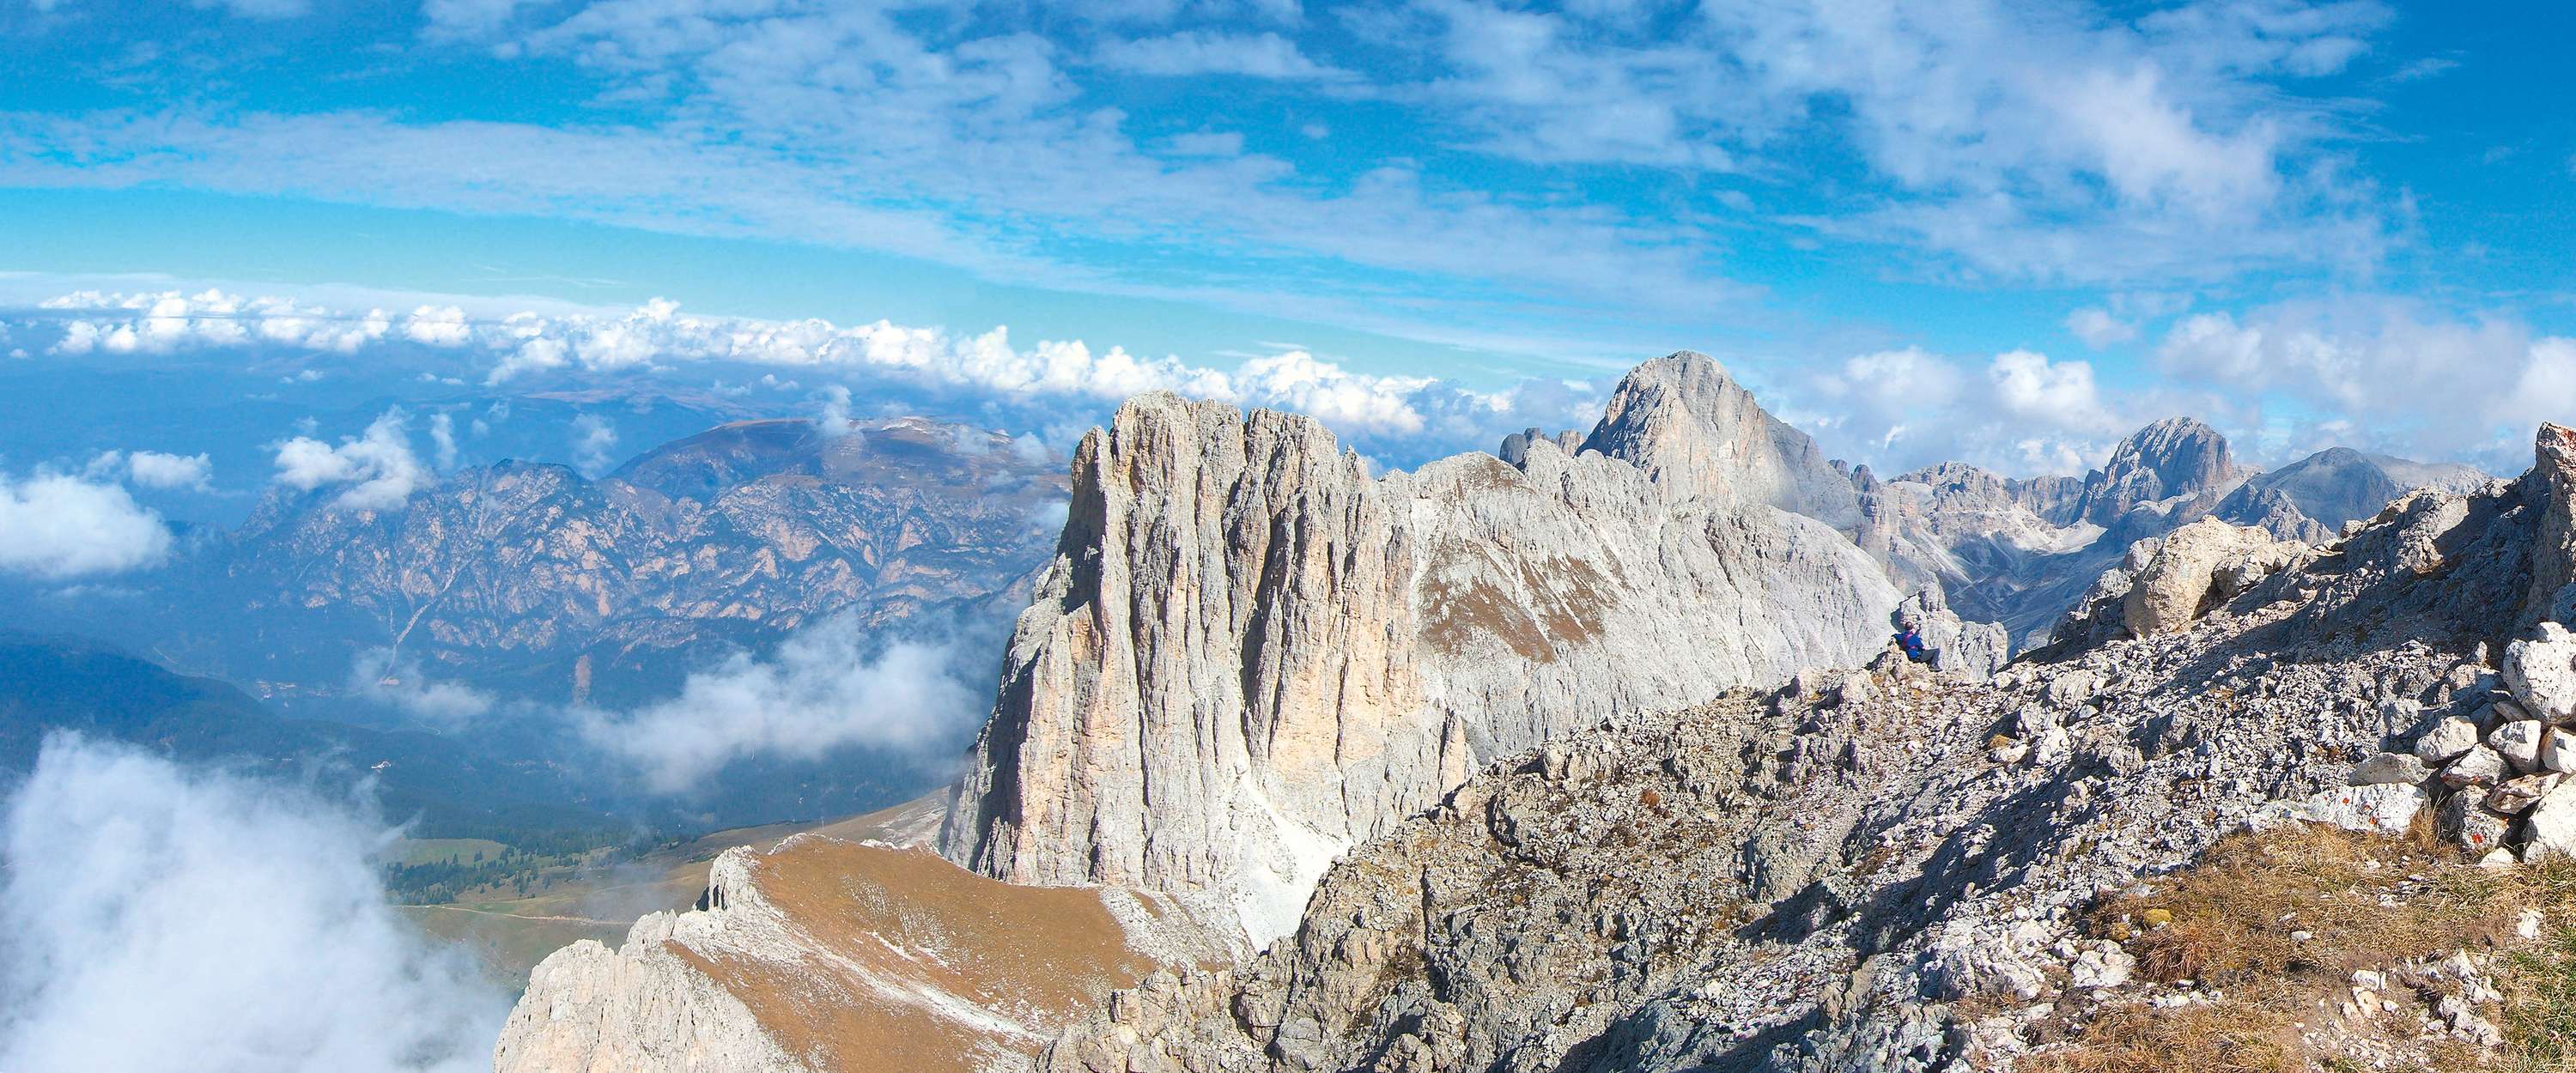             Berggipfel – Fototapete mit Bergpanorama & Wolkendecke
        